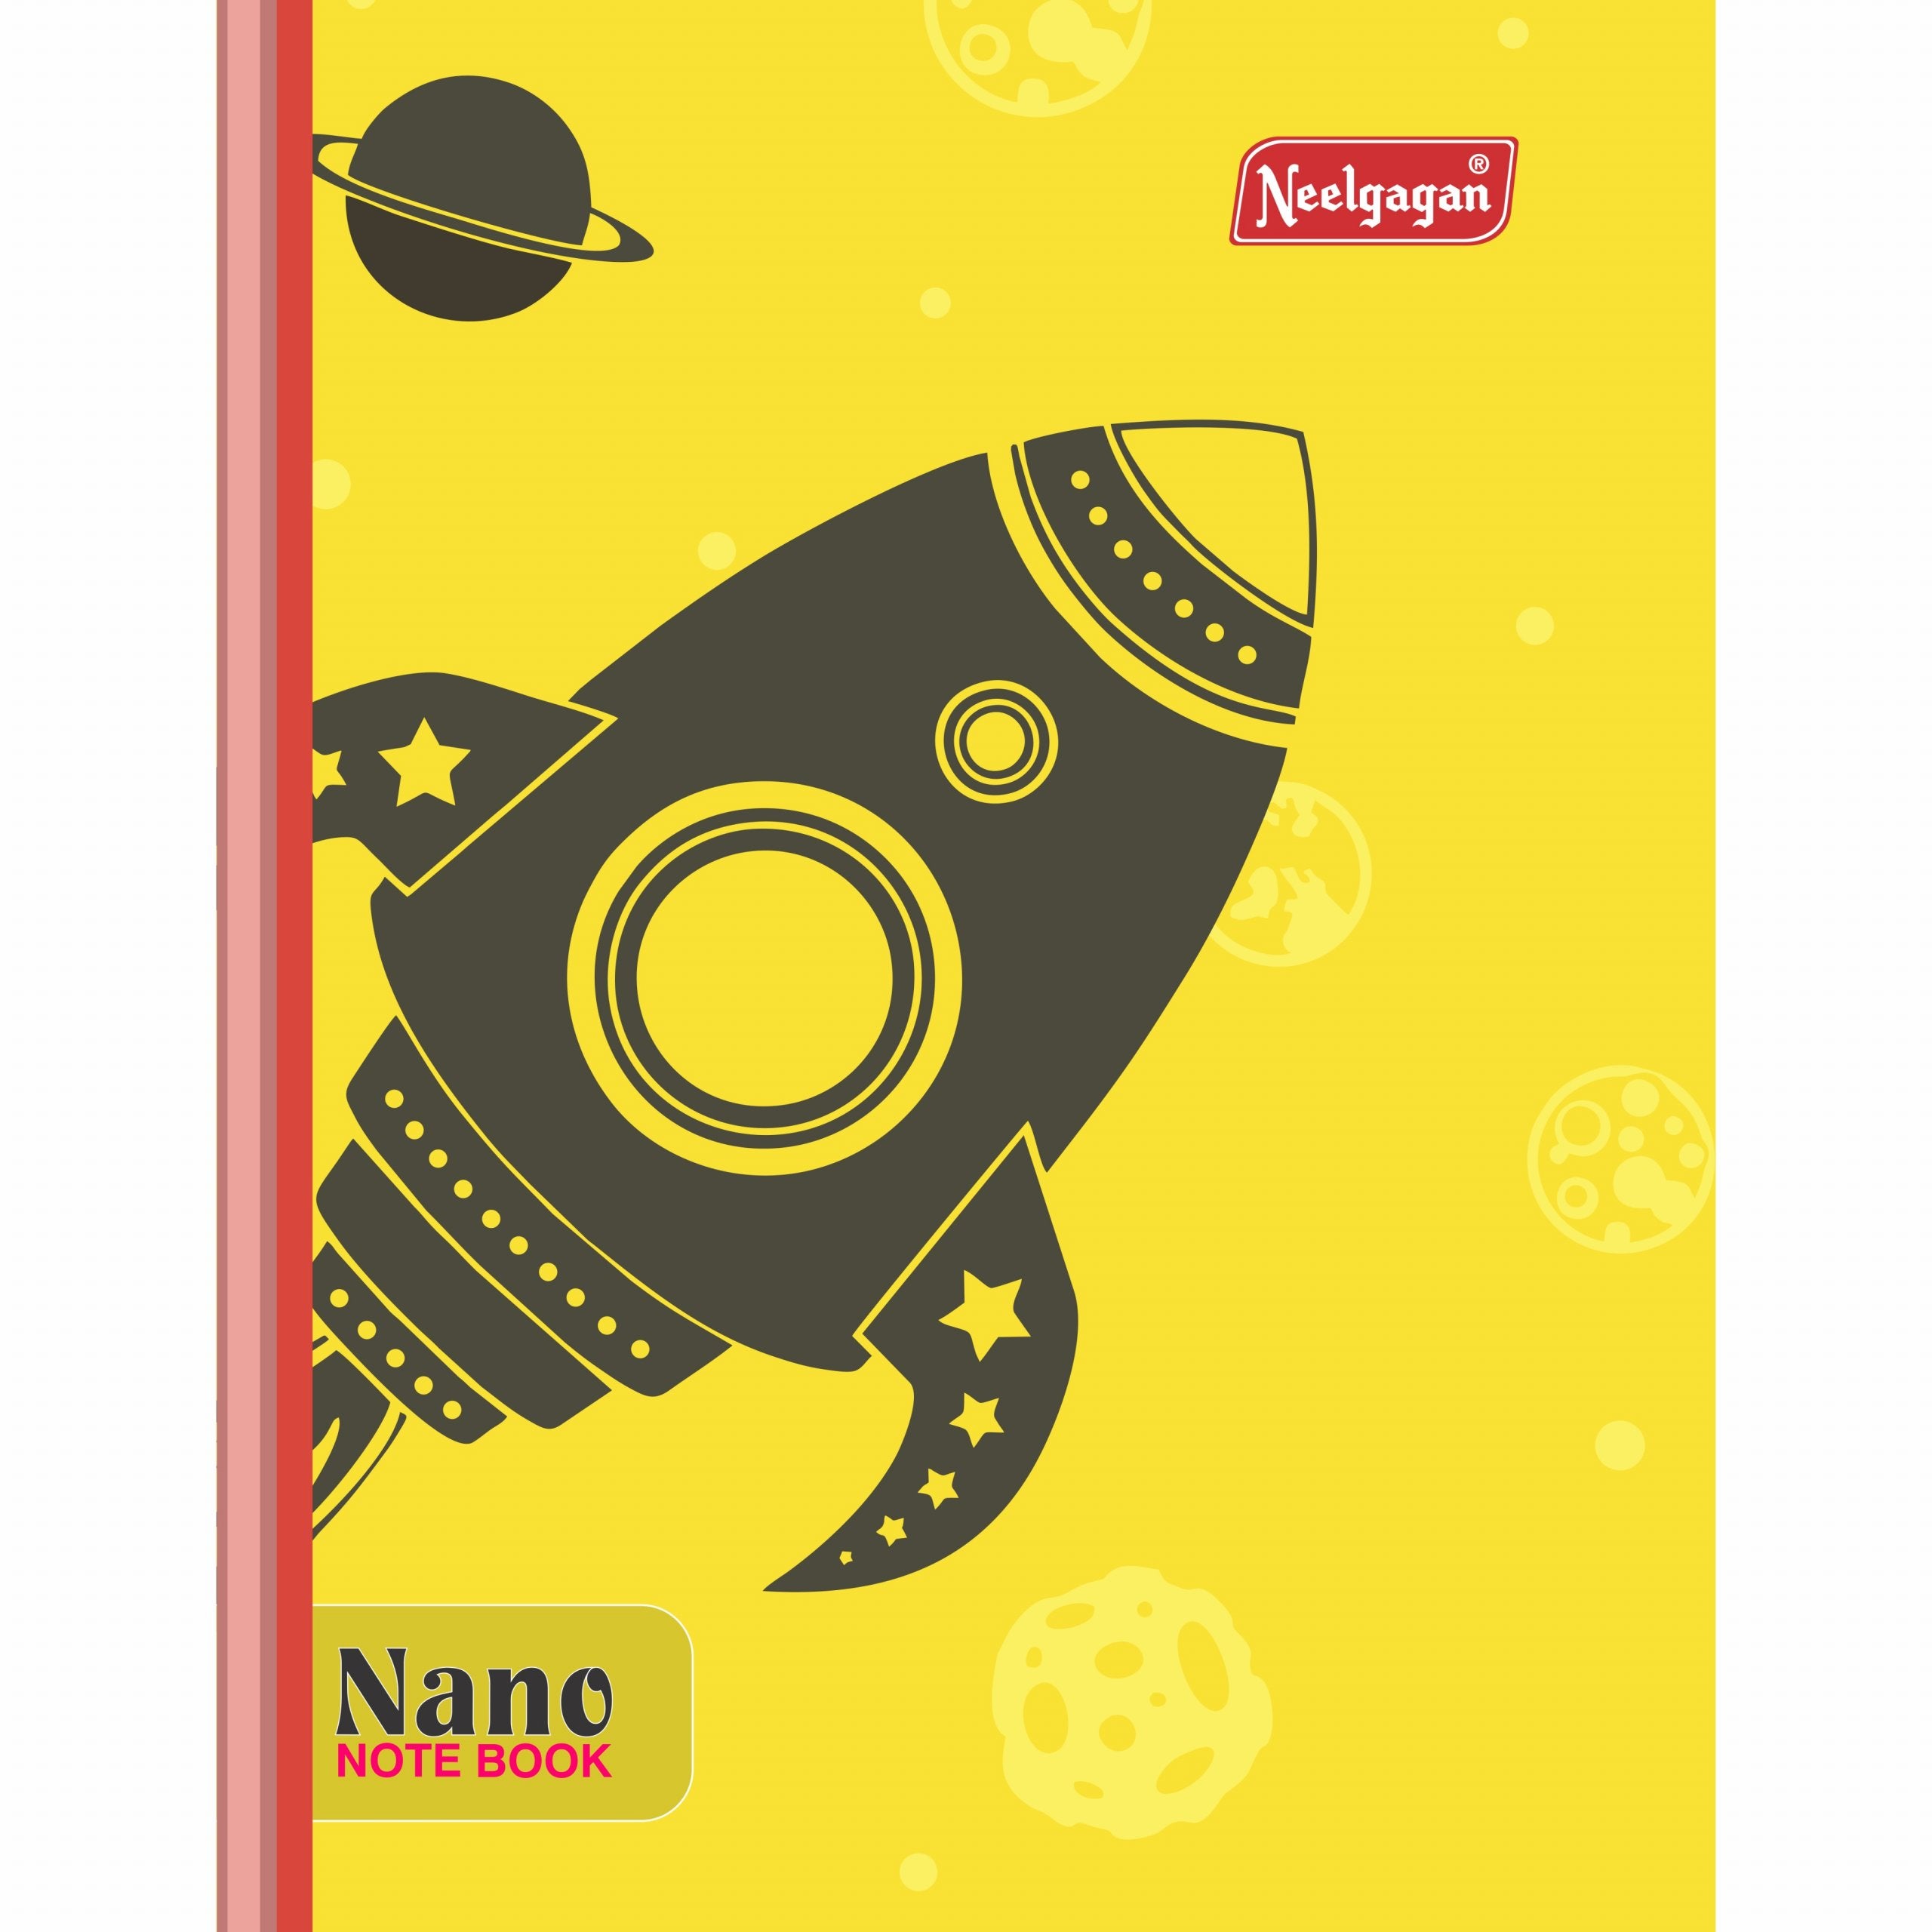 Nano Notebook, (15.0cm x 19.0cm) Hardbound